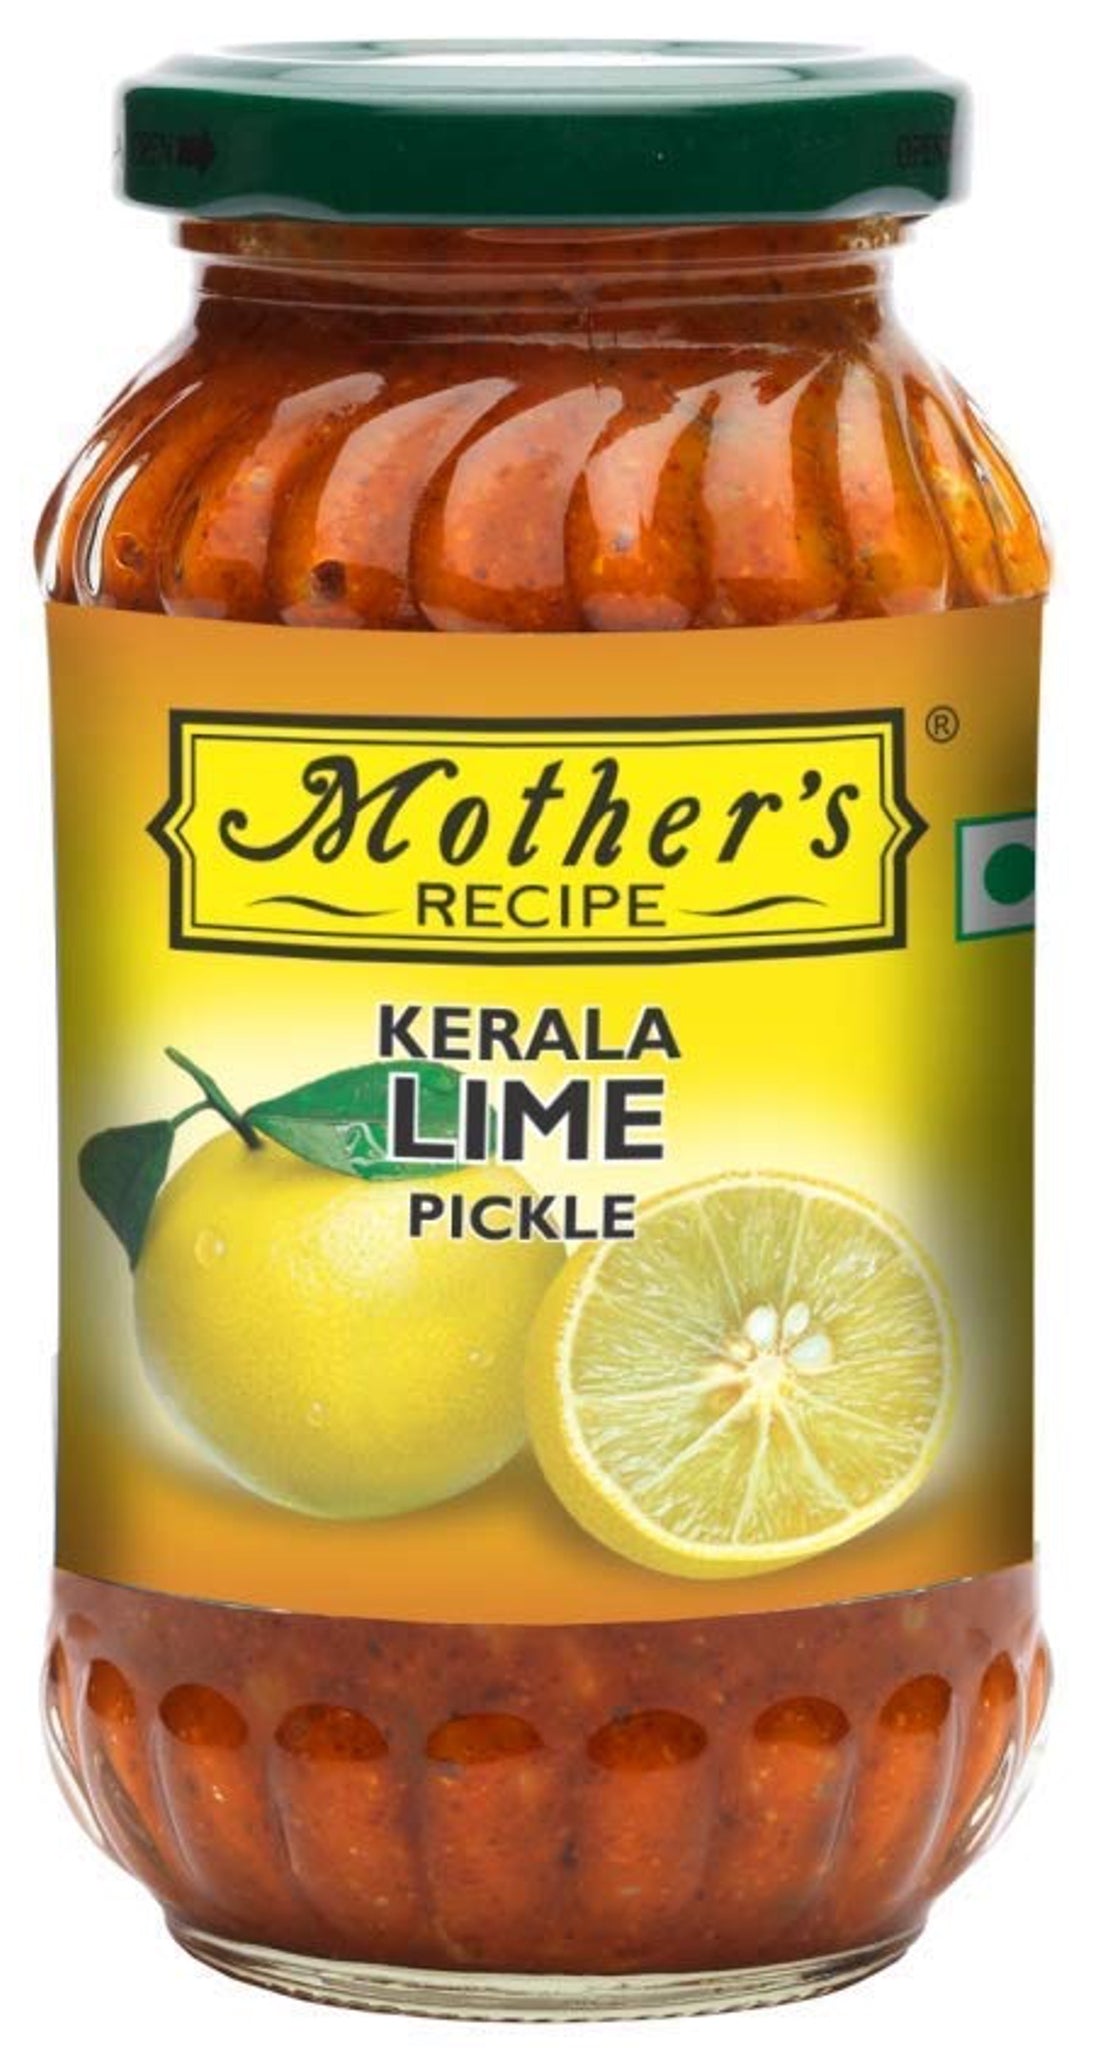 Kerala Lime Pickle